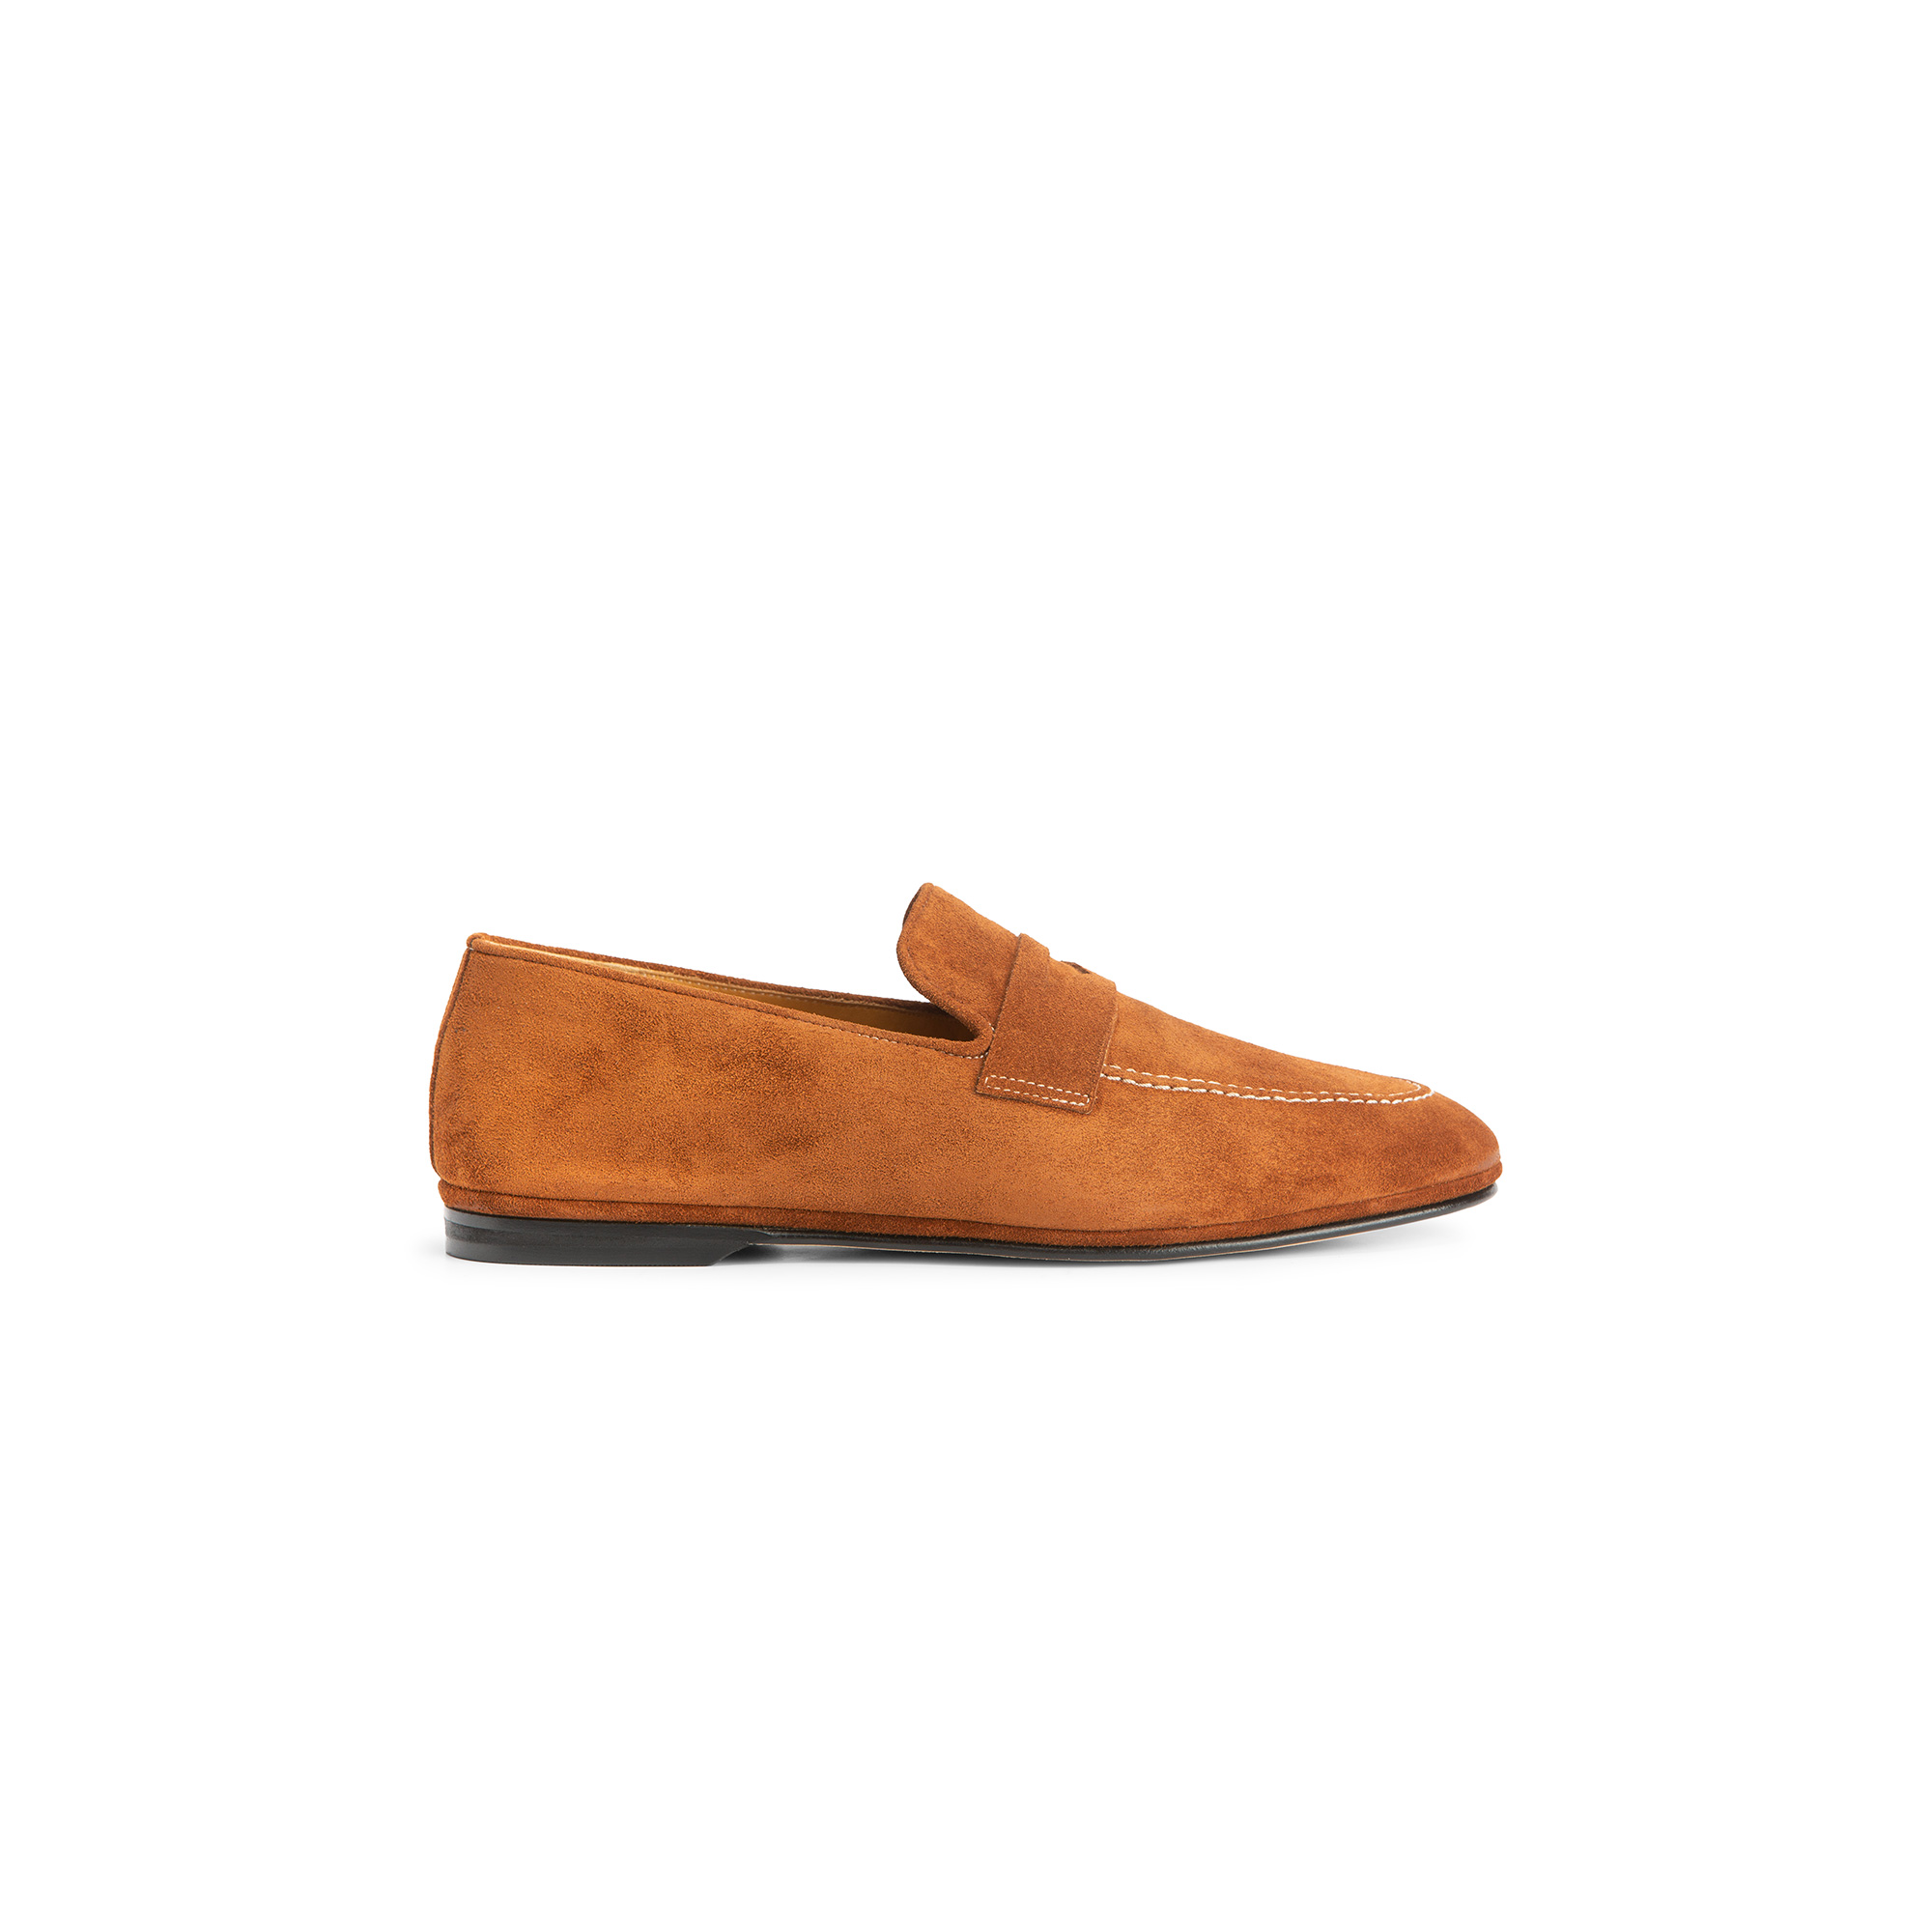 Pantofola esterno chiusa velour niger - Farfalla italian slippers